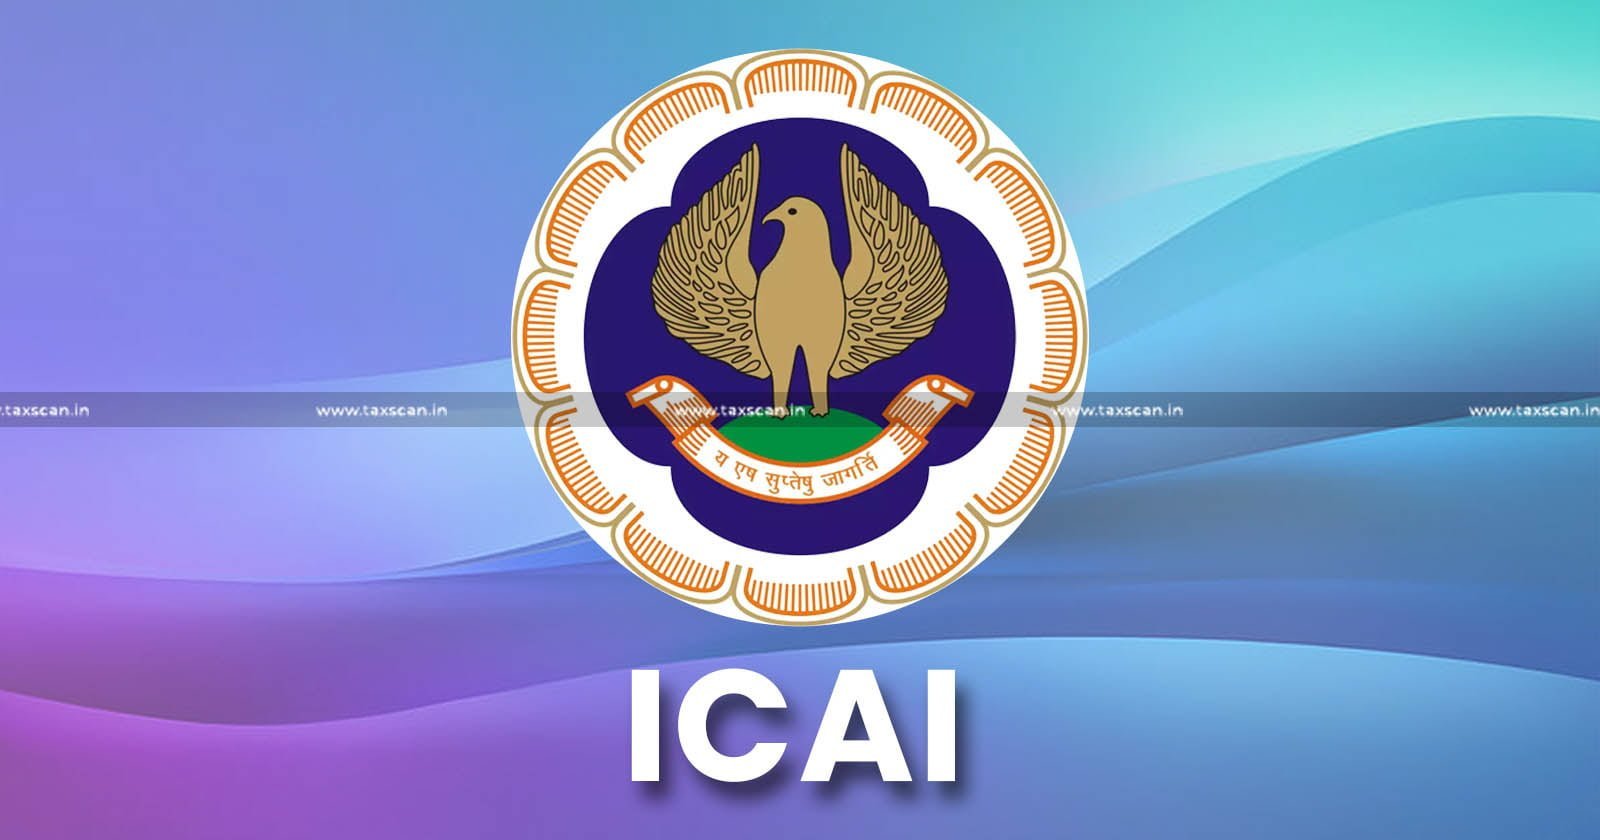 ICAI - Social Audit Standards - taxscan